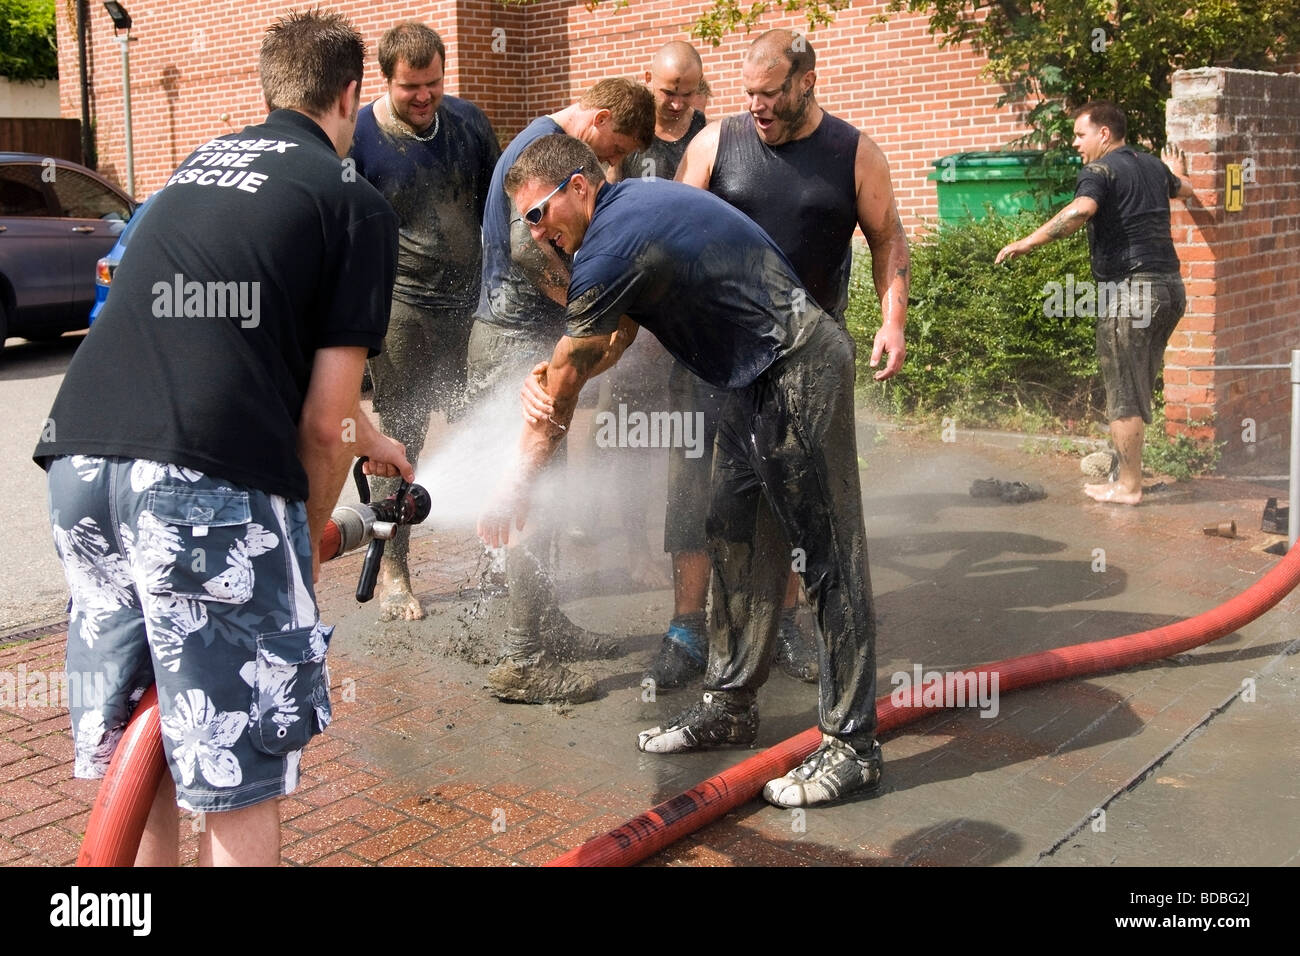 Off-duty fireman hosing down tug-of-war competitors Stock Photo